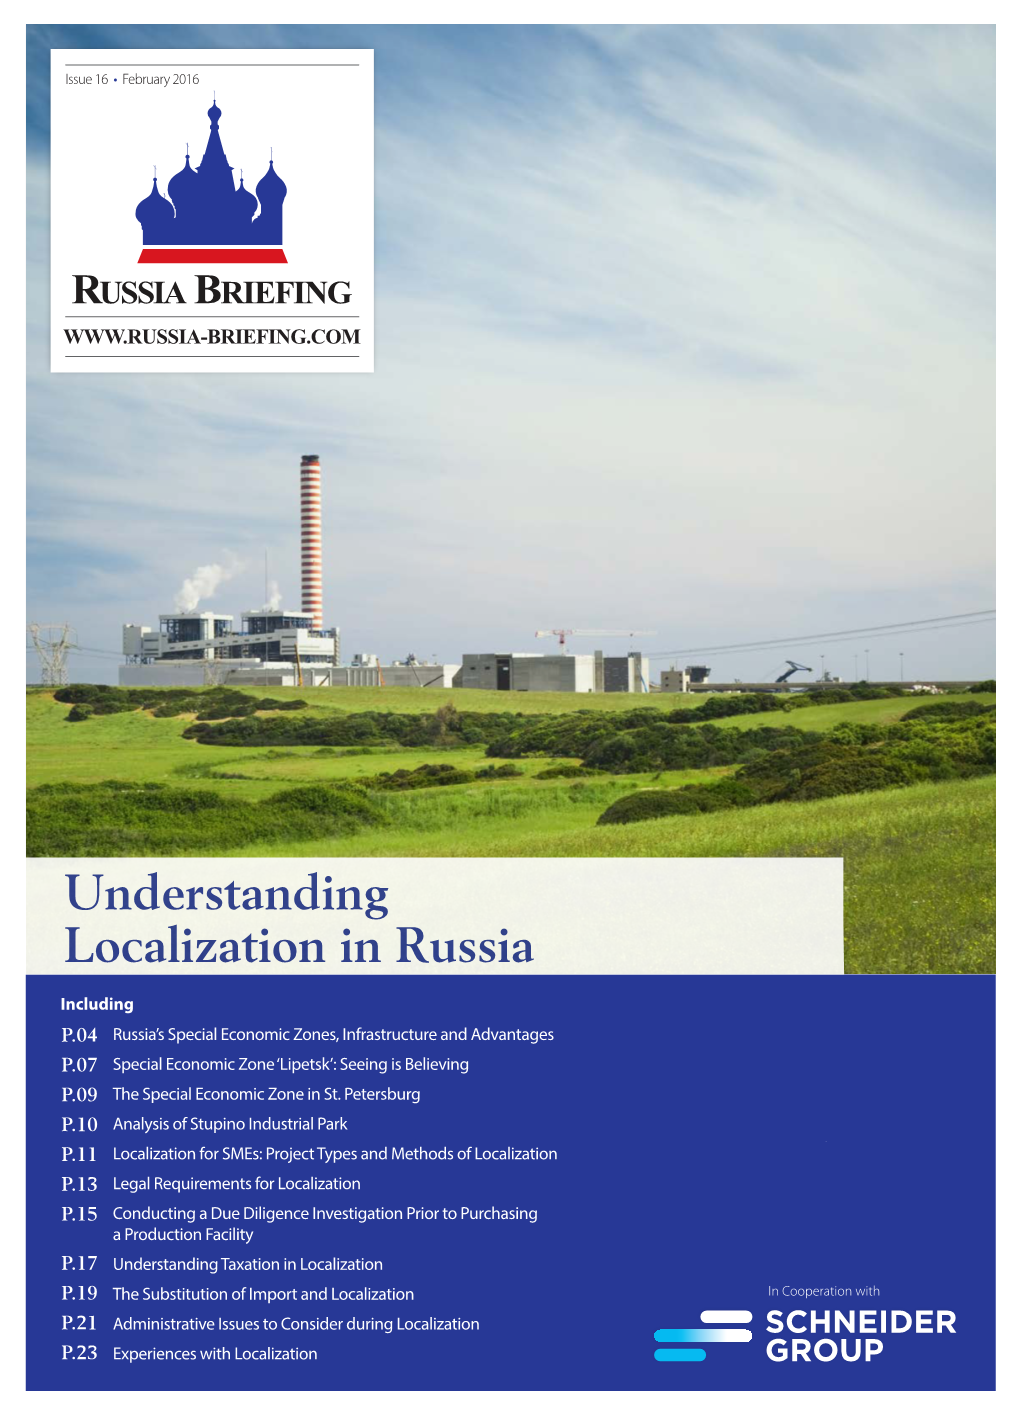 Understanding Localization in Russia